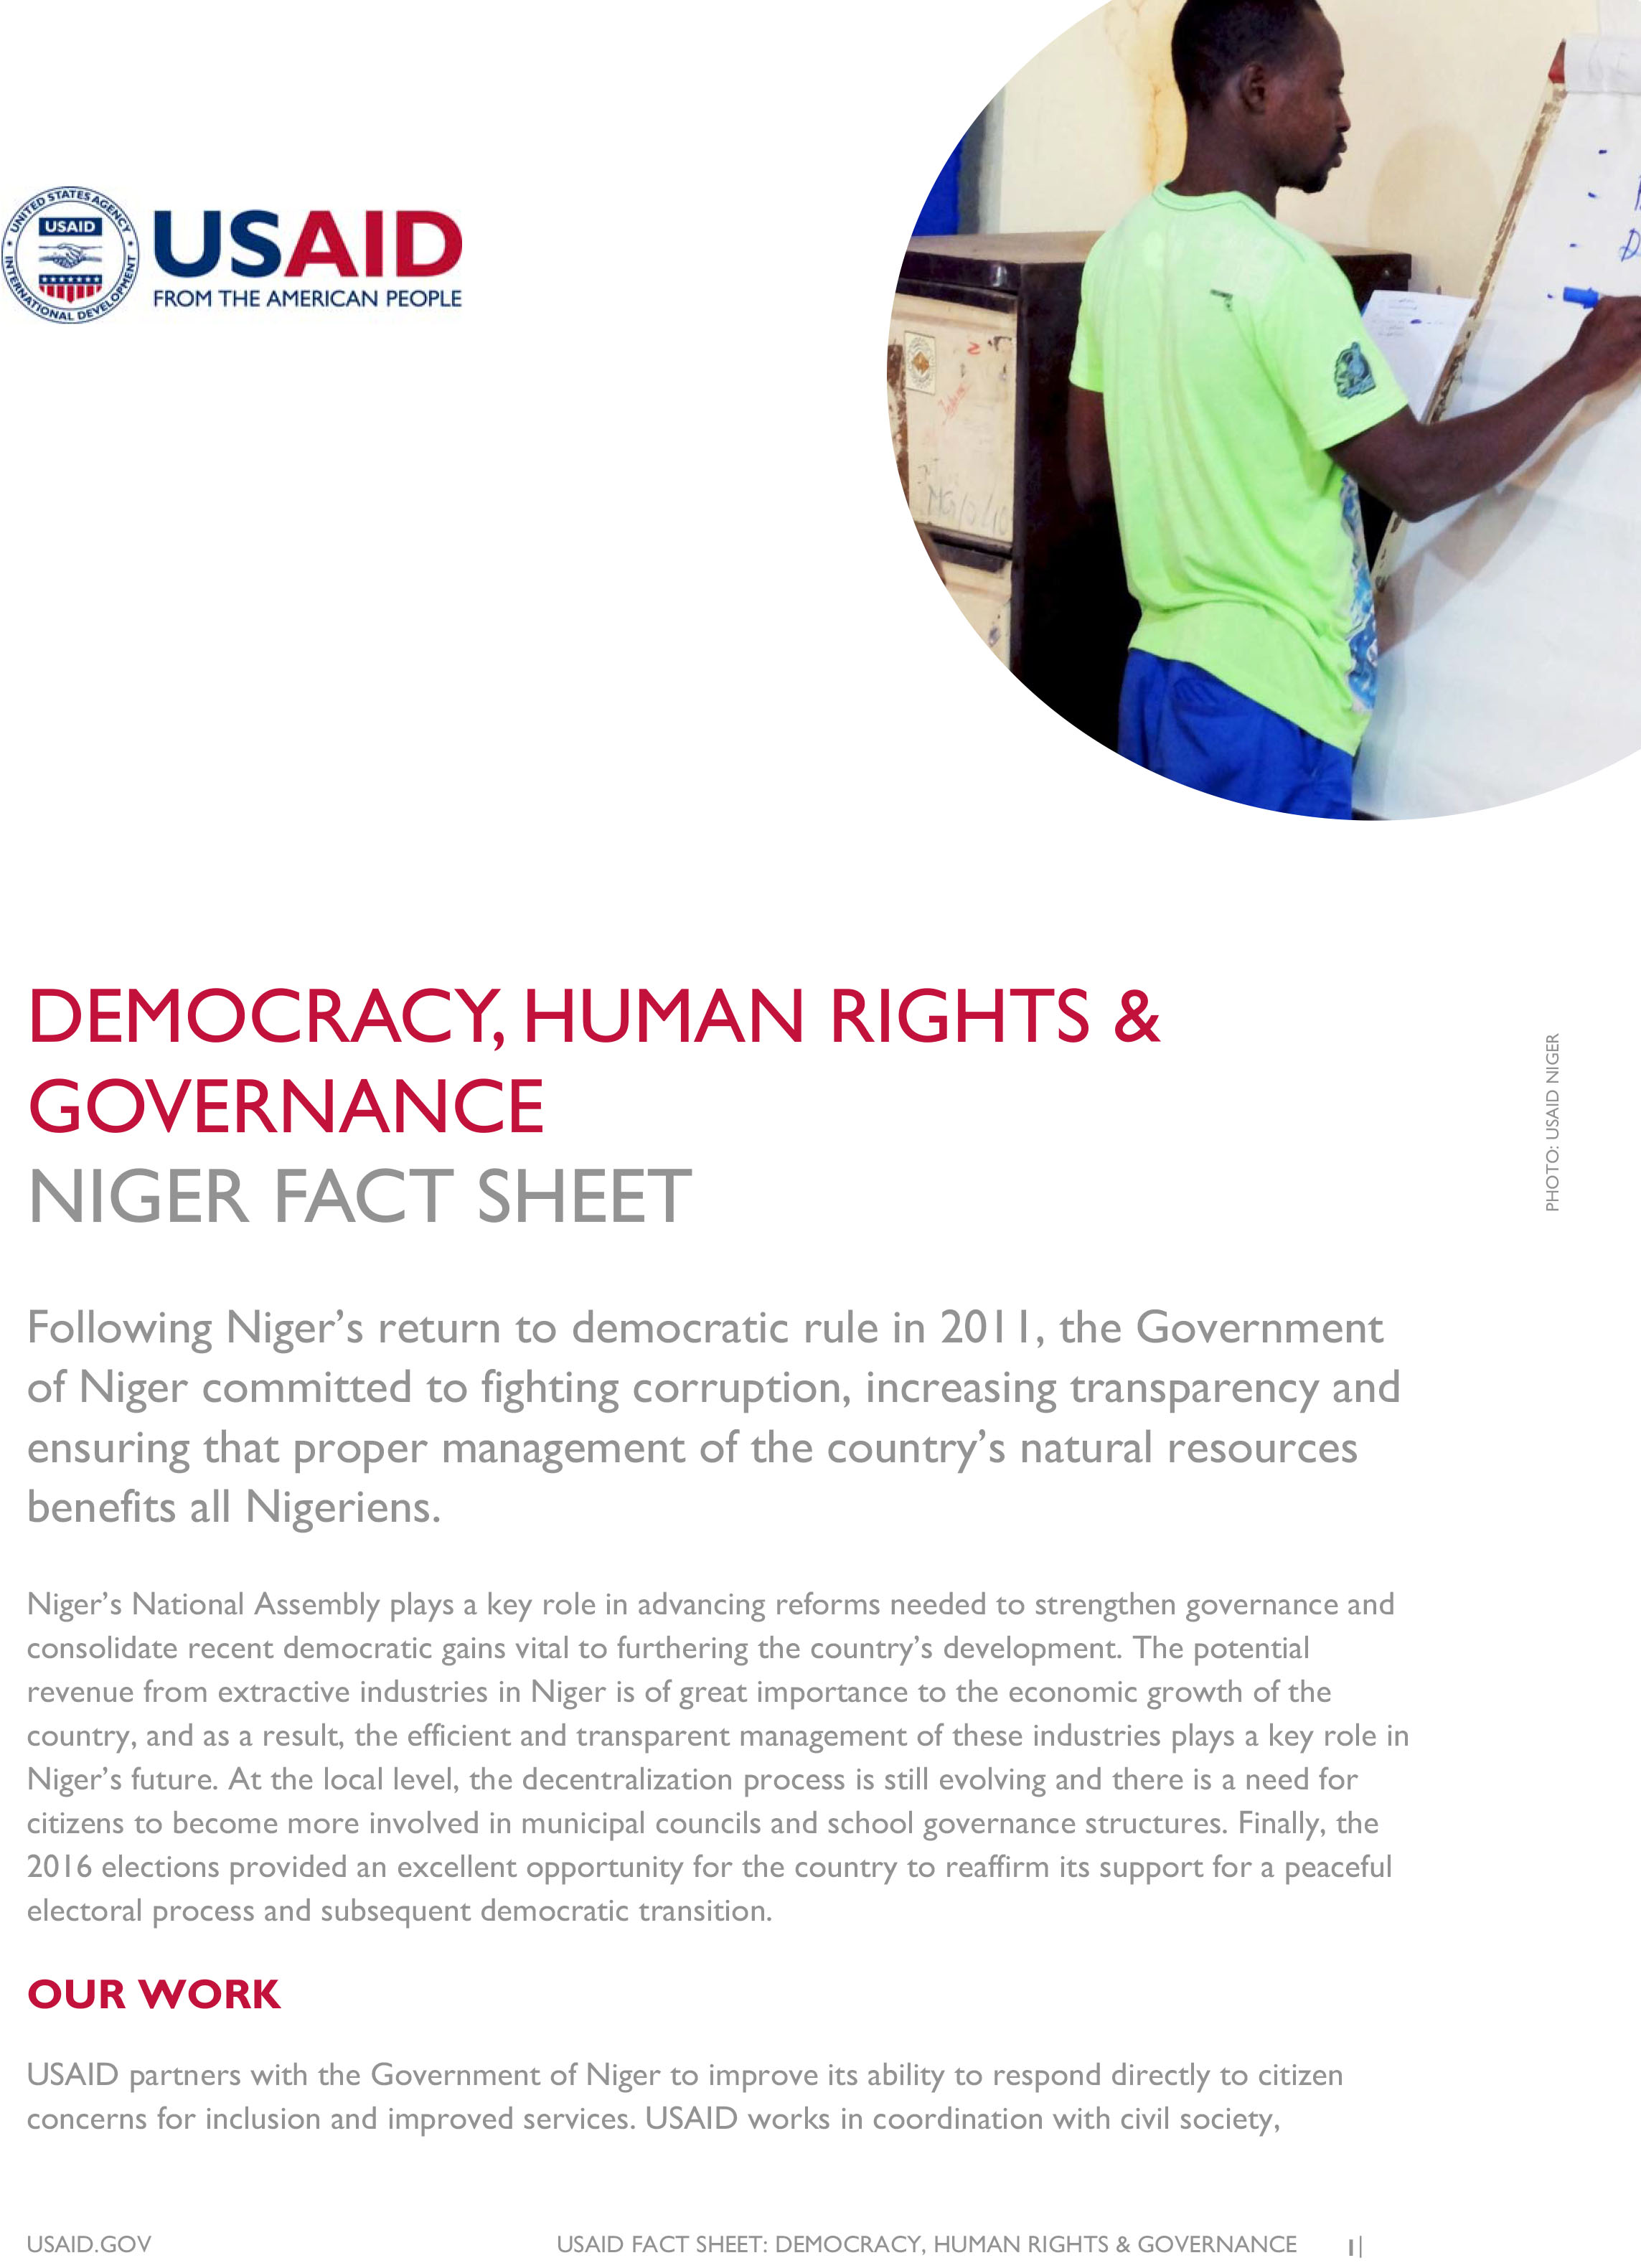 Niger Democracy, Human Rights and Governance Fact Sheet